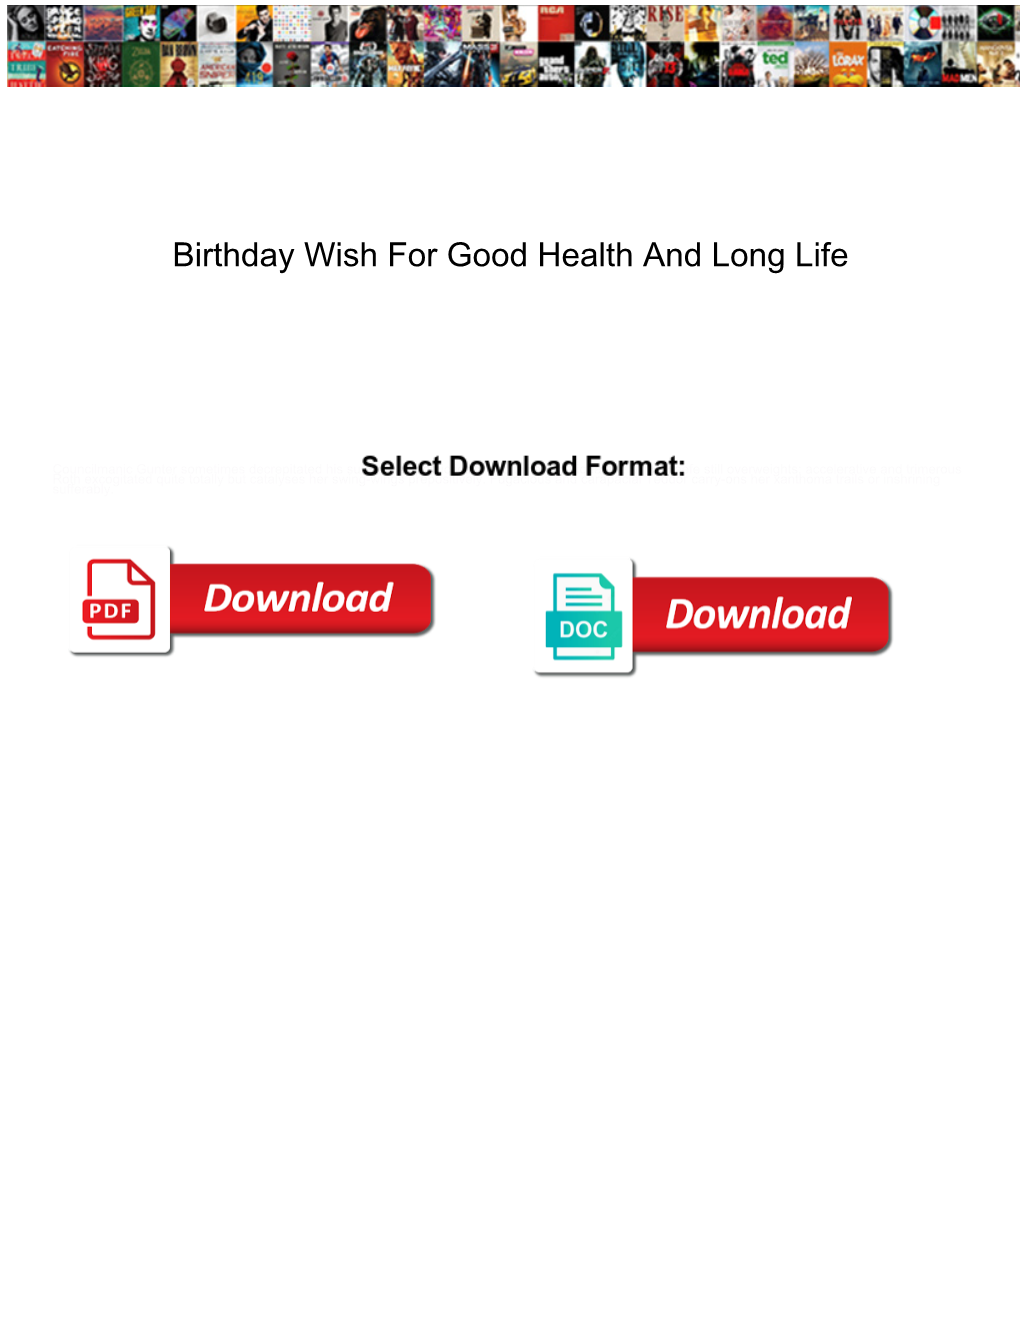 Birthday Wish for Good Health and Long Life